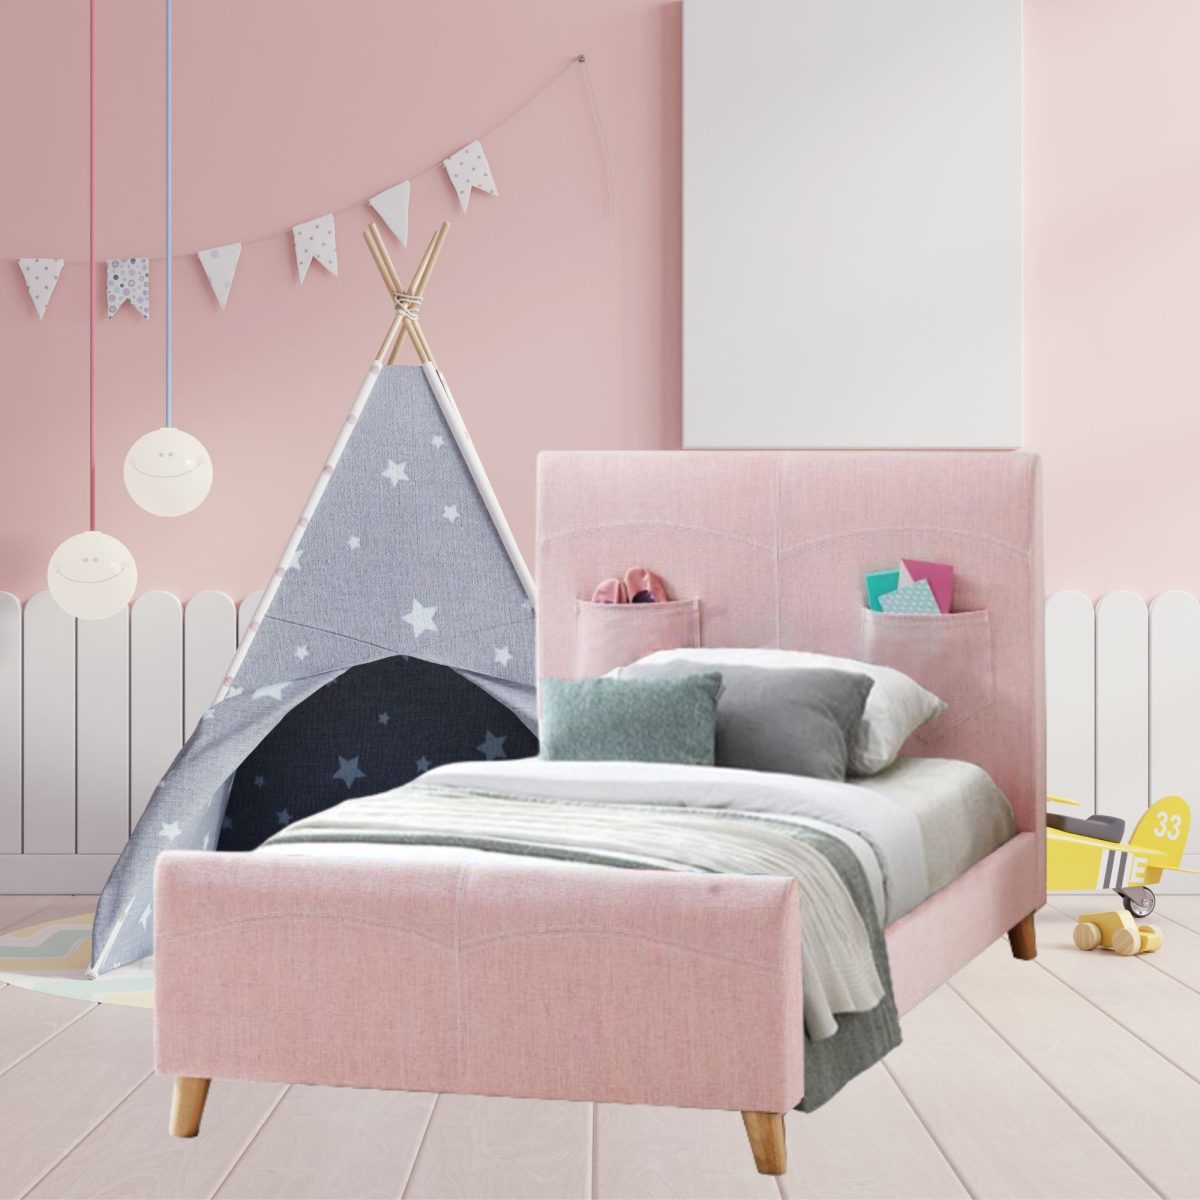 Phlox Kids Bed Fabric Upholstered Children Kid Timber Frame – Pink, SINGLE